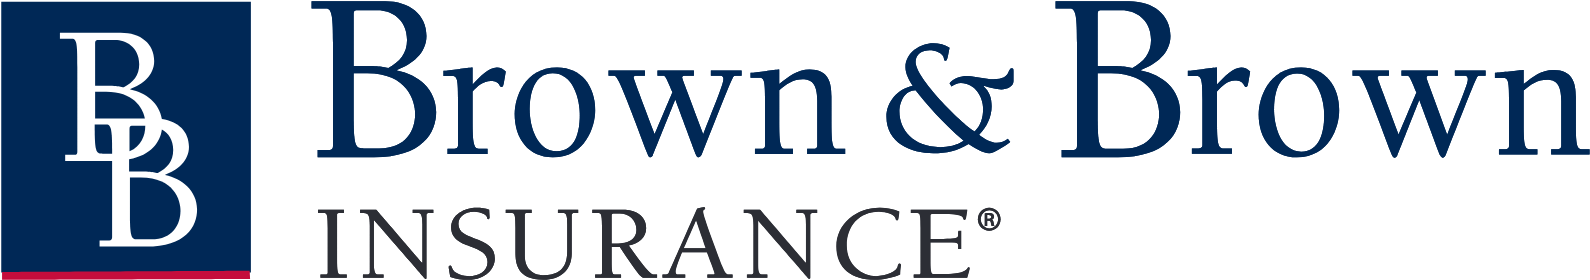 Brown & Brown
 logo large (transparent PNG)